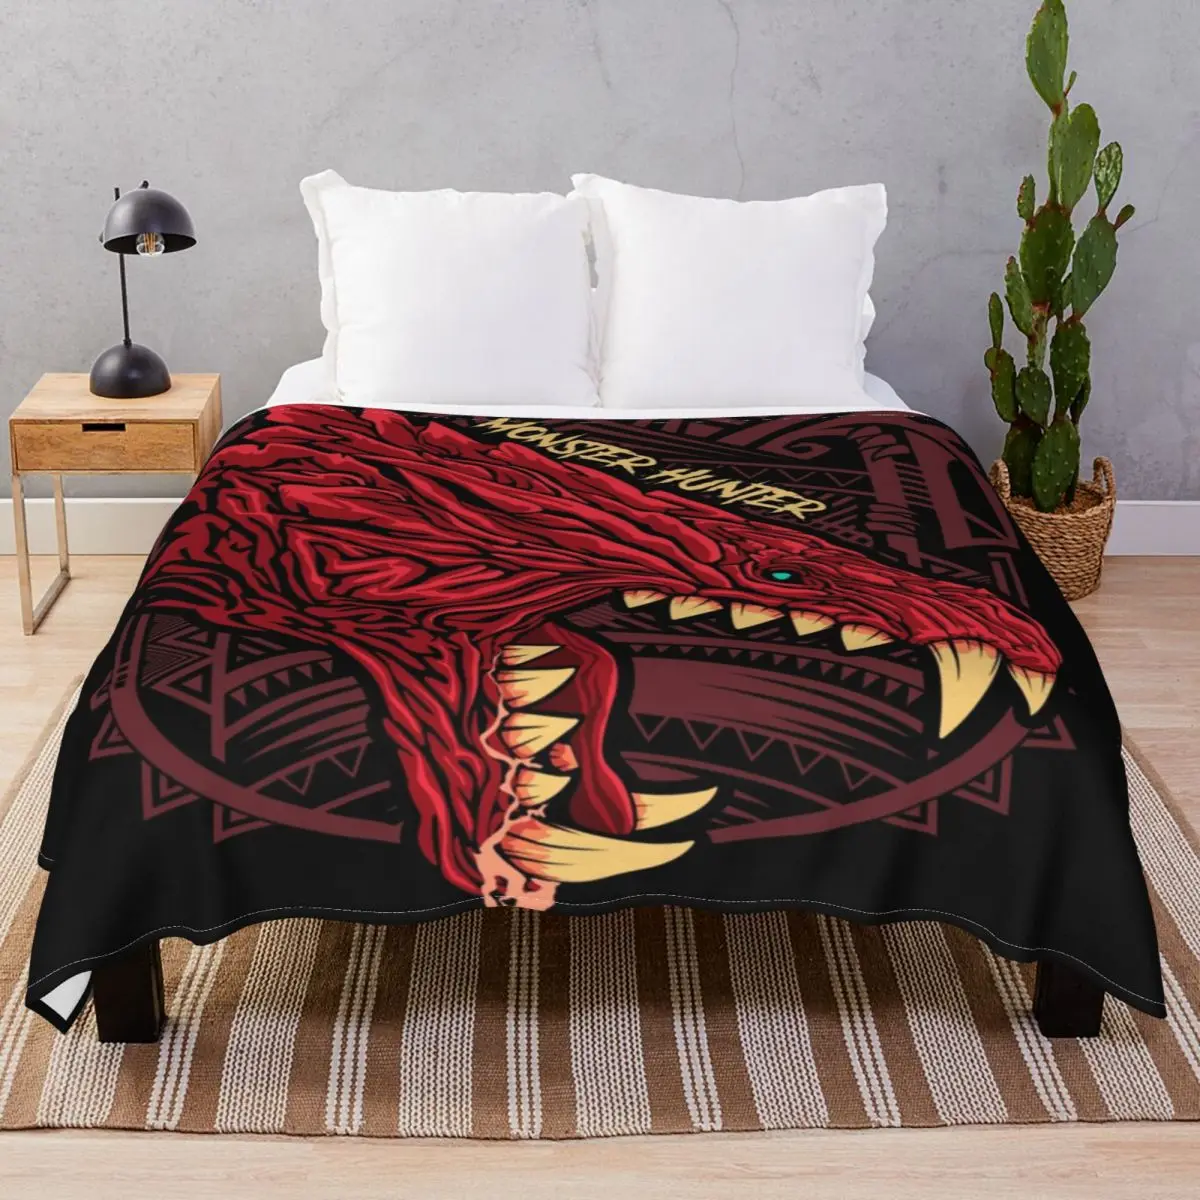 Odogaron Monster Hunter Blankets Flannel Textile Decor Warm Throw Blanket for Bed Home Couch Travel Cinema